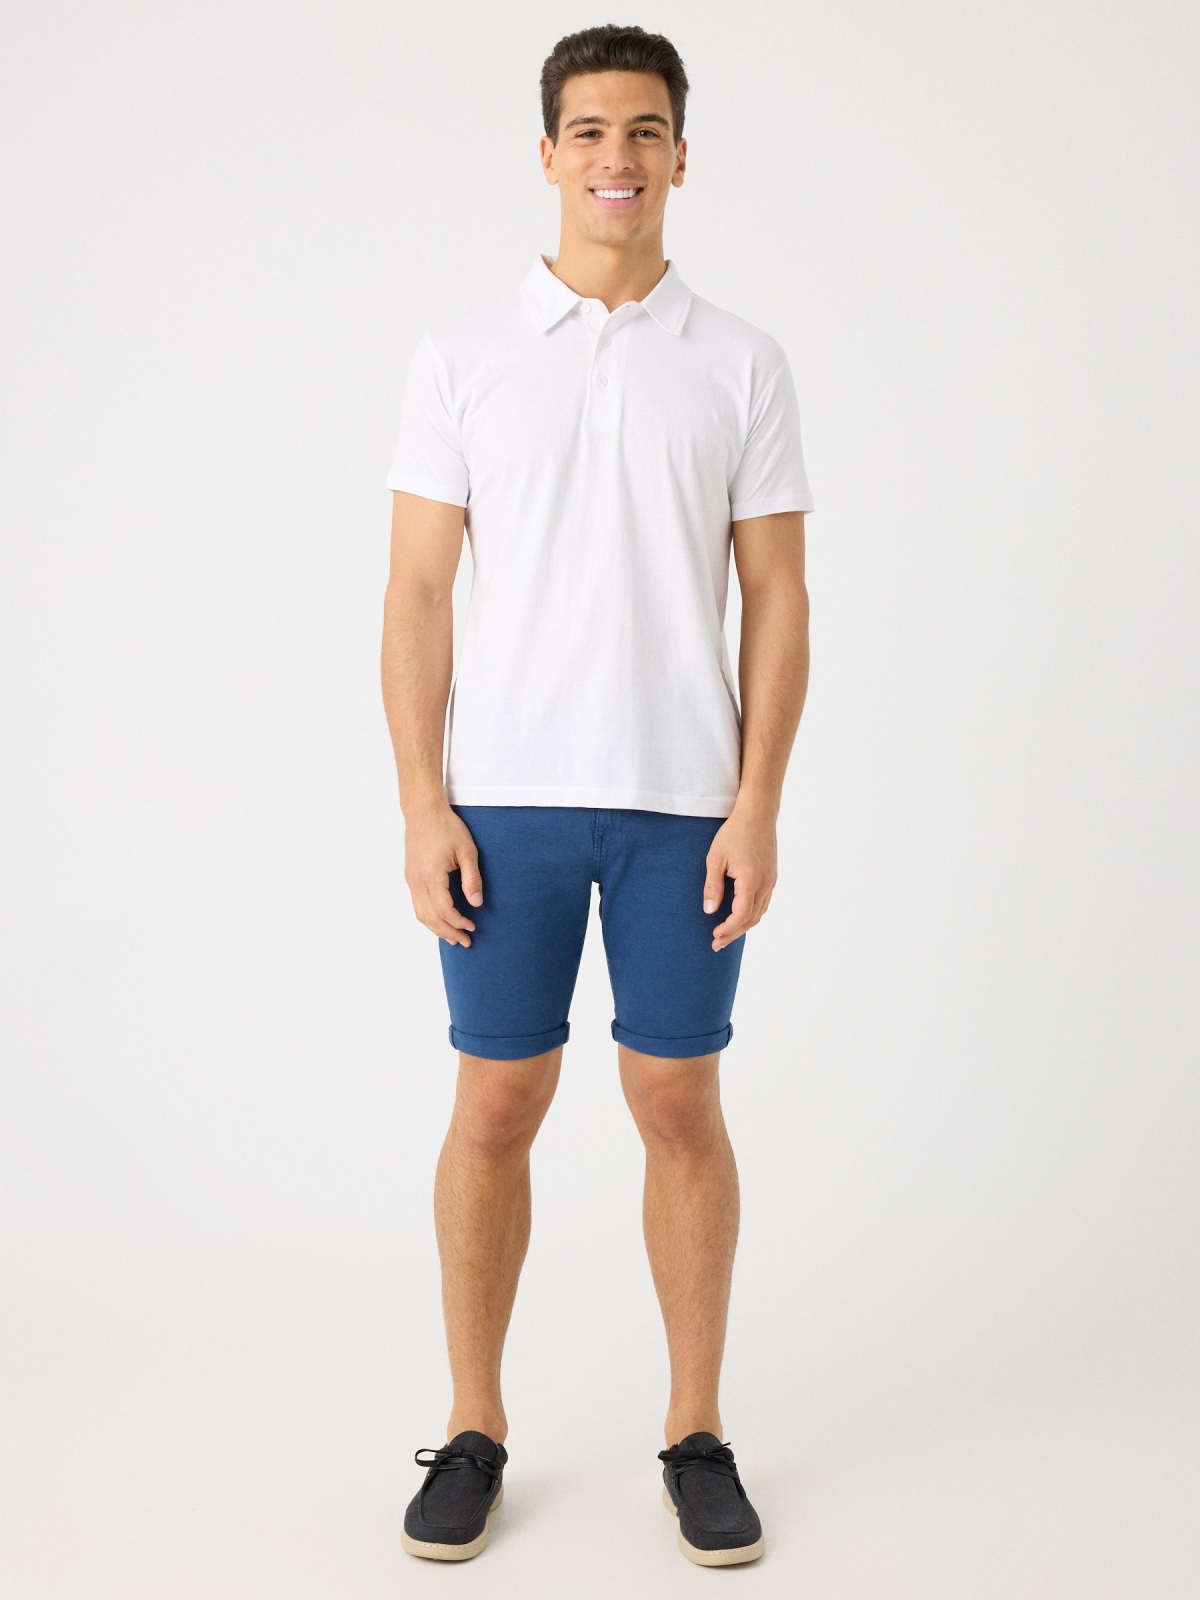 Coloured denim shorts indigo front view